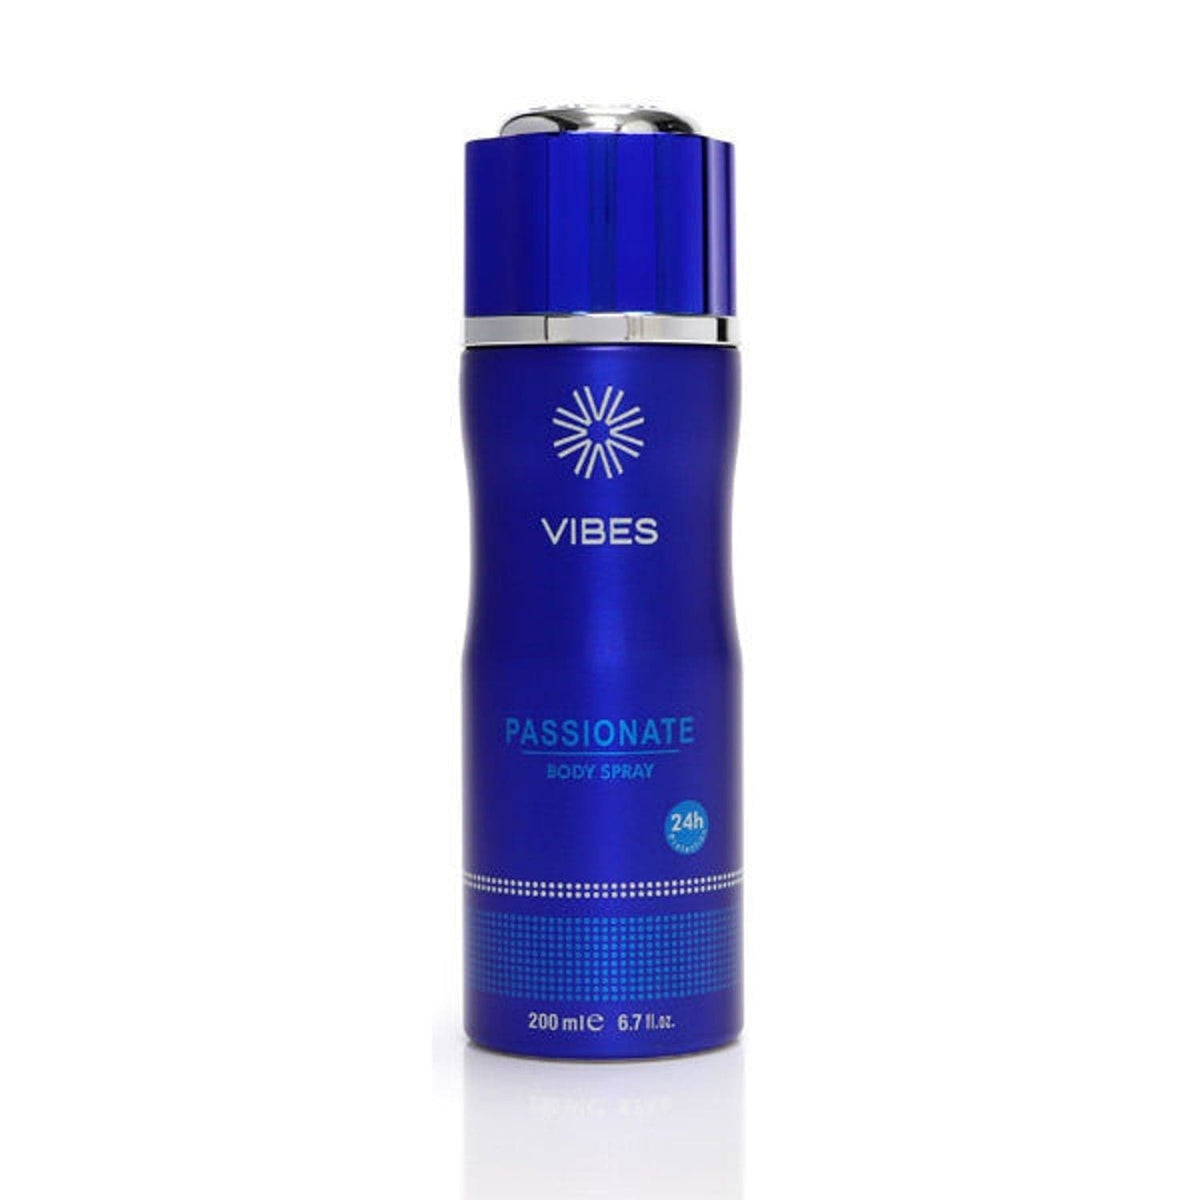 Hemani Vibes Body Spray - Passionate - Premium  from Hemani - Just Rs 440.00! Shop now at Cozmetica